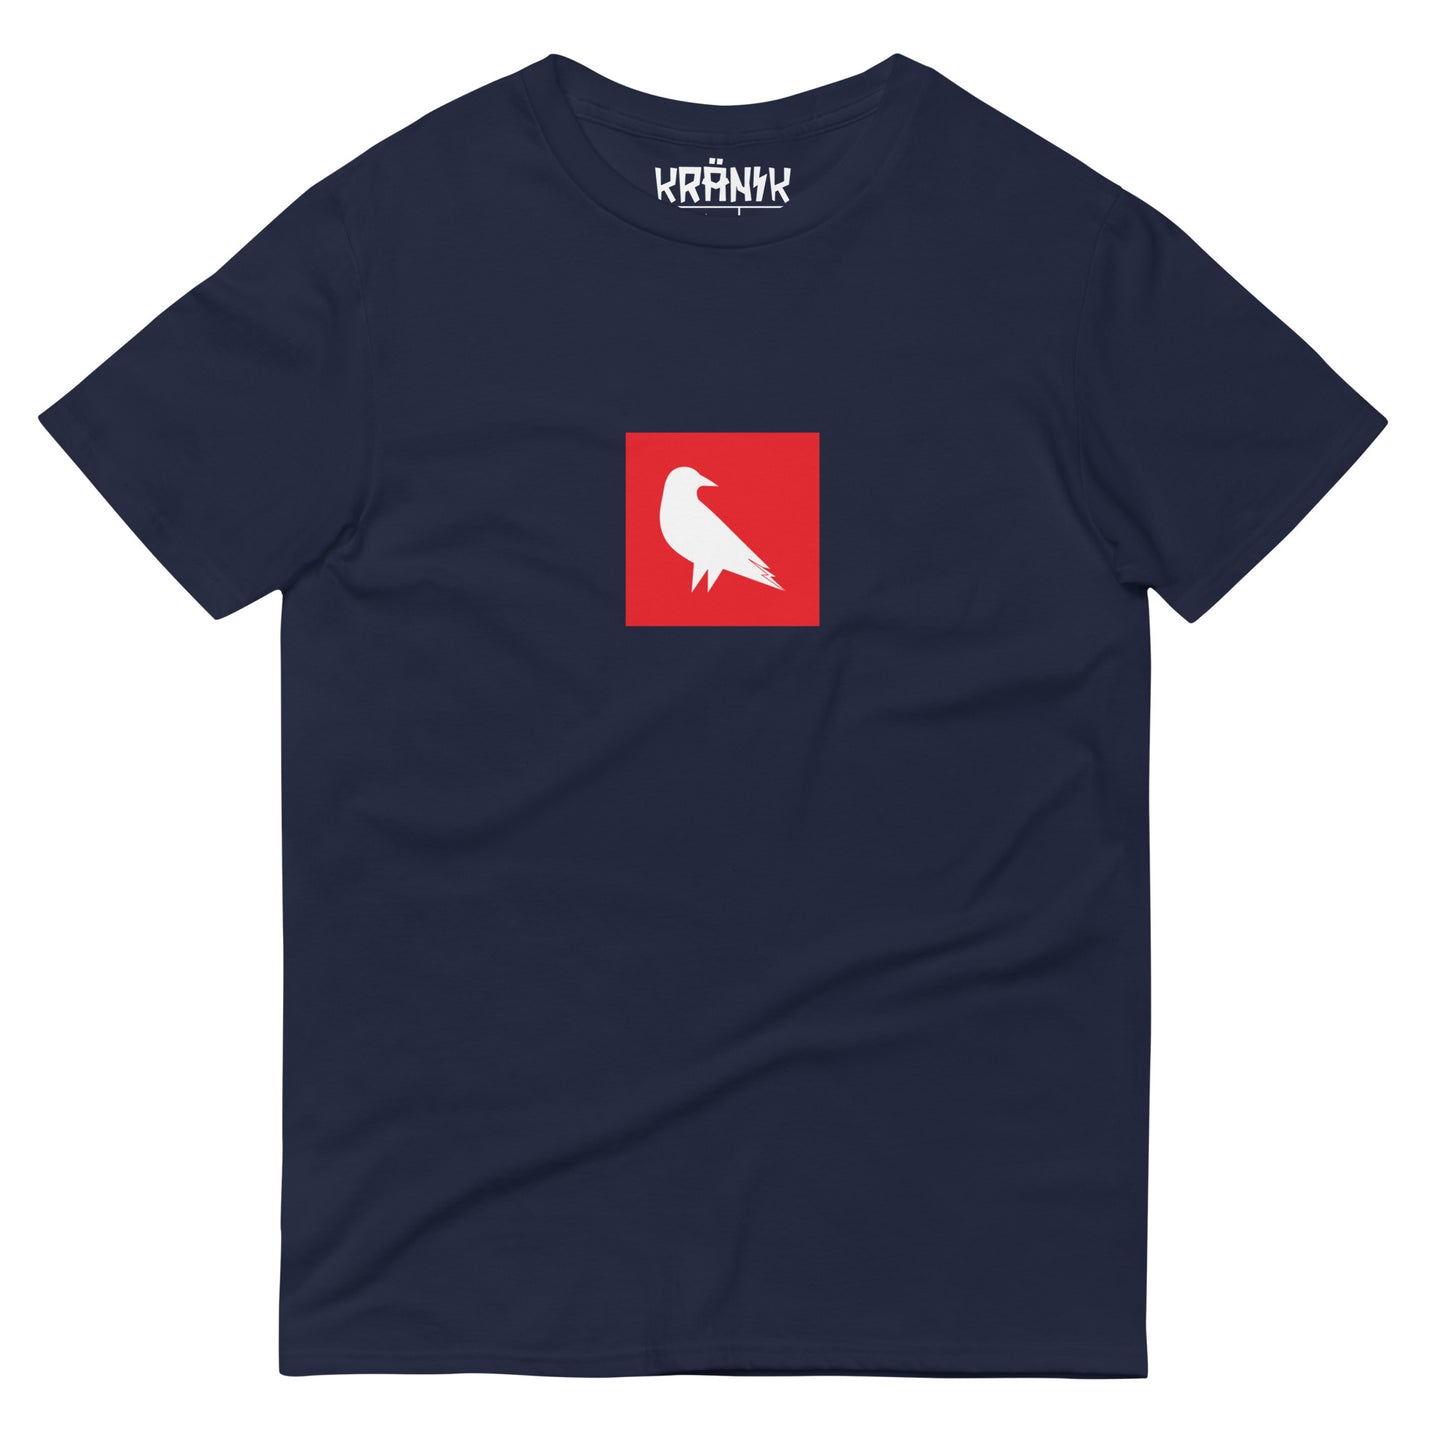 Kranik Brand / T-Shirt / DTG Print / Raven Red Box